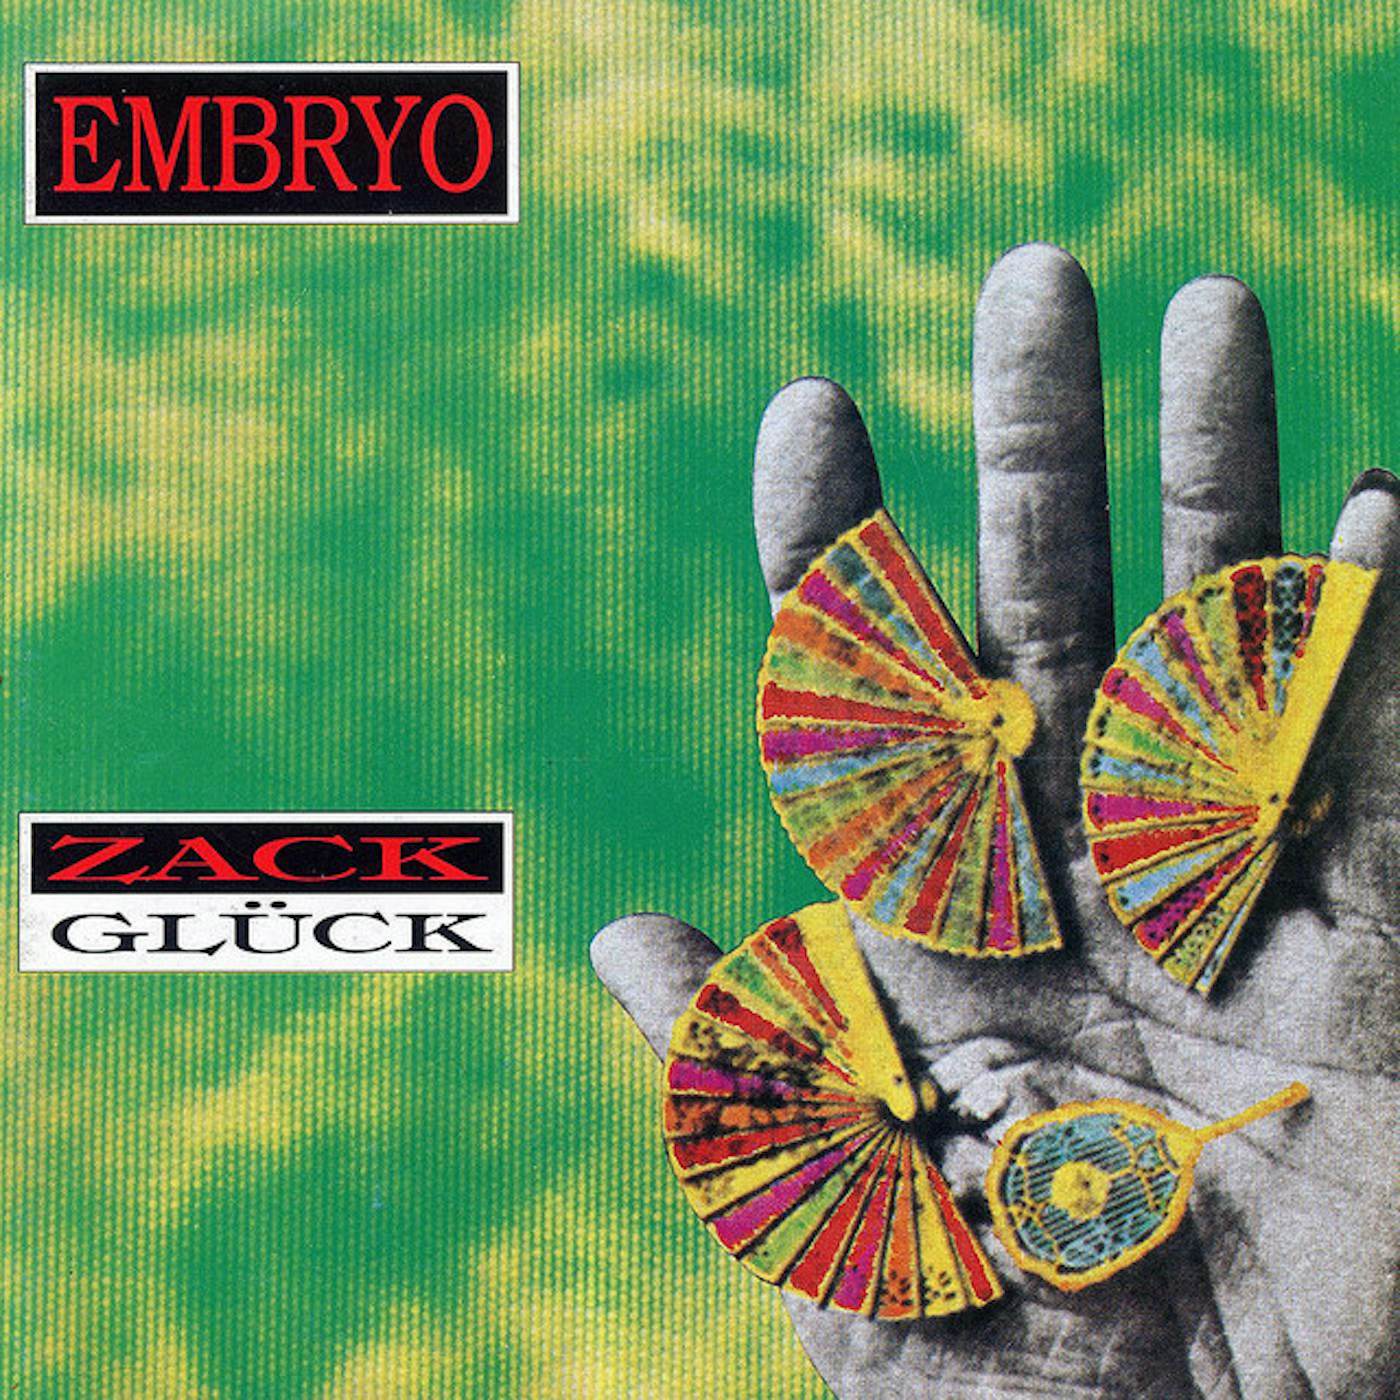 Embryo ZACK GLUCK CD